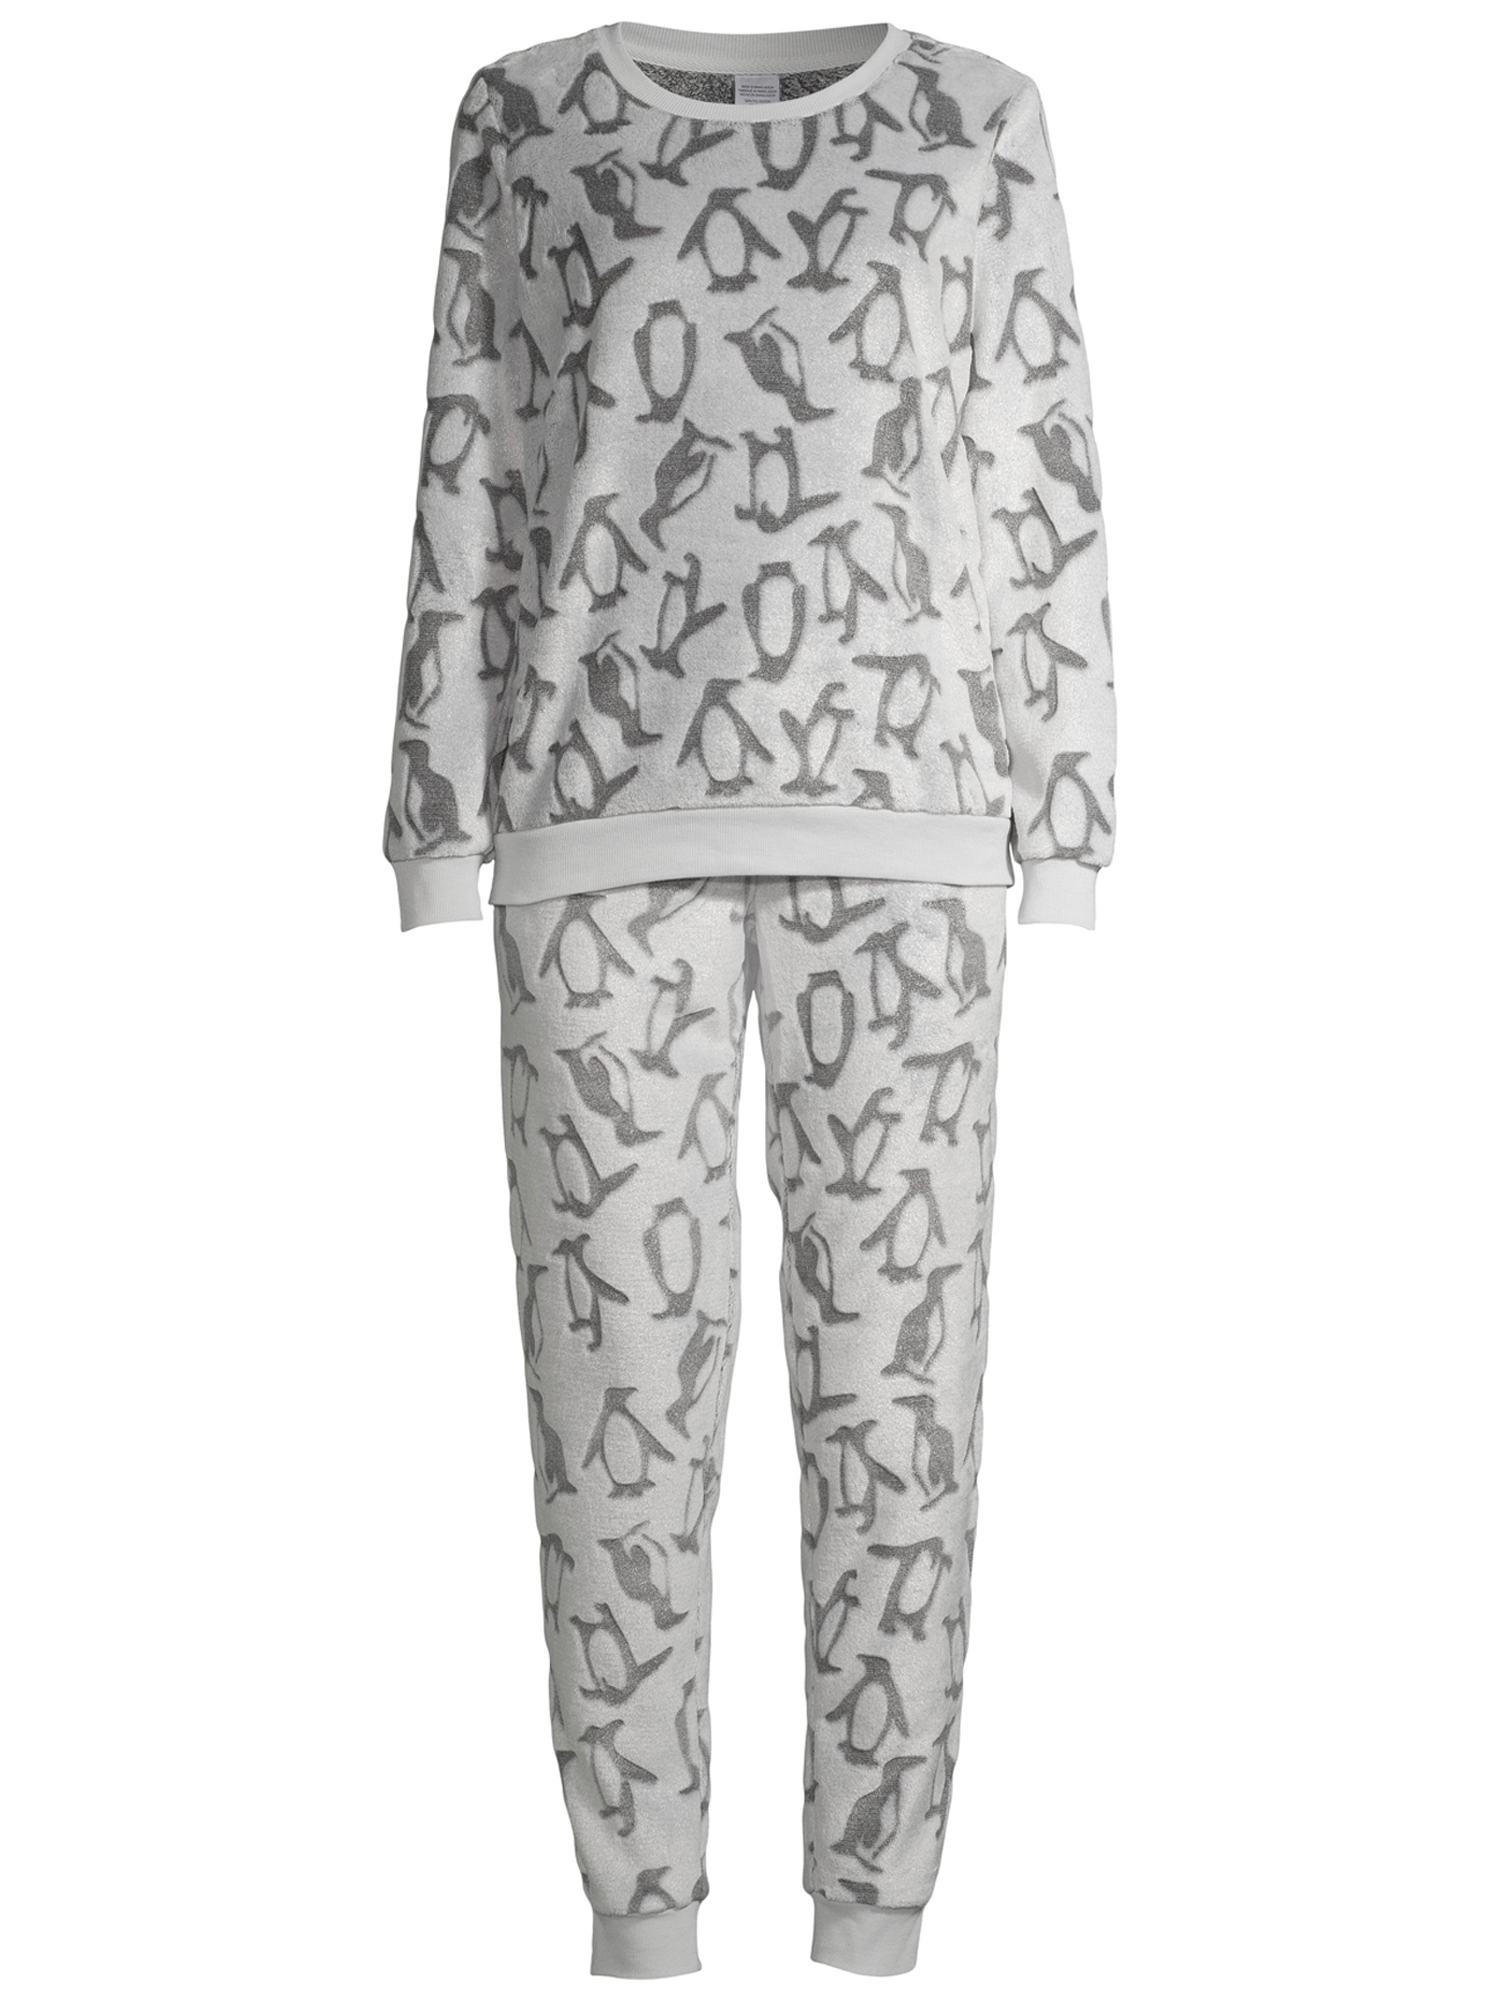 George Women's and Women's Plus 2-Piece Plush Pajama Set - image 5 of 6